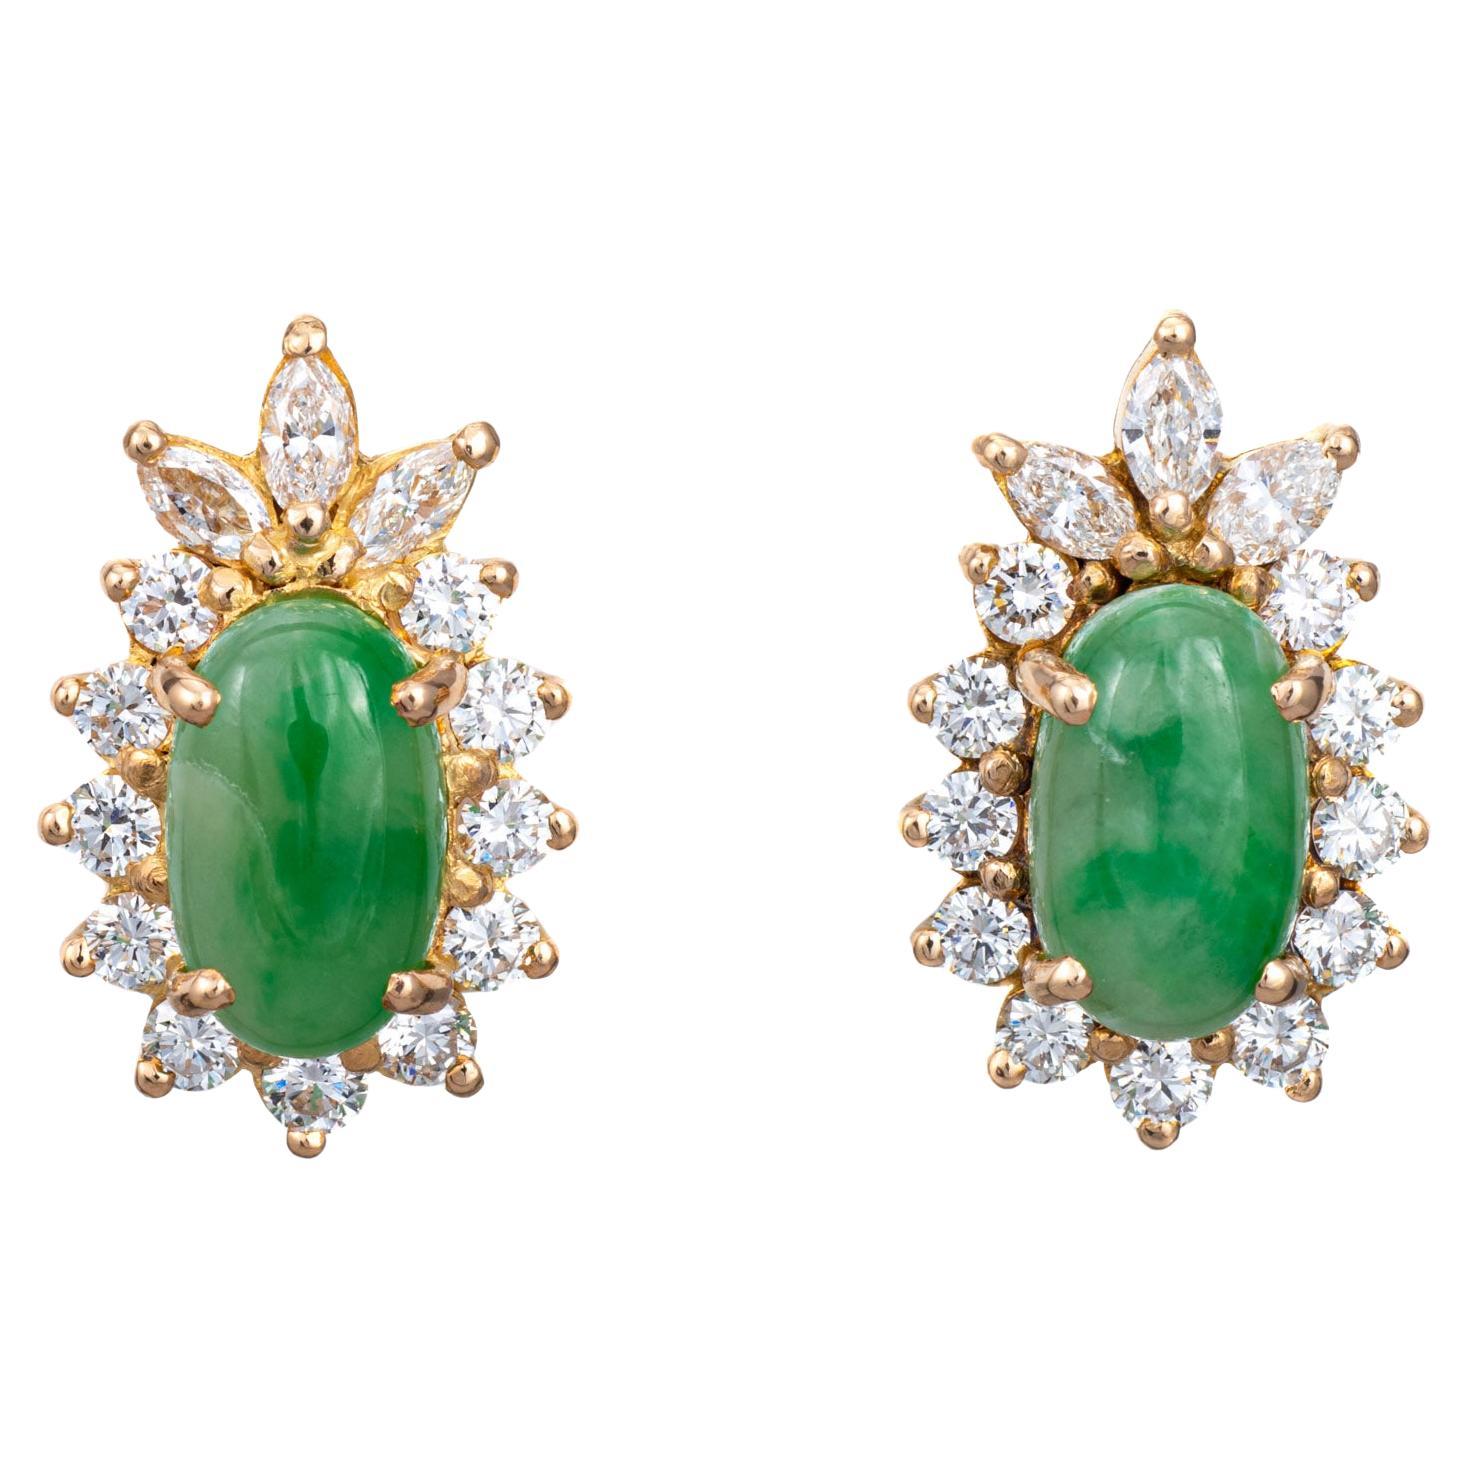 Jade Vintage Diamond Earrings Studs 14k Yellow Gold Estate Jewelry Mixed Cuts 